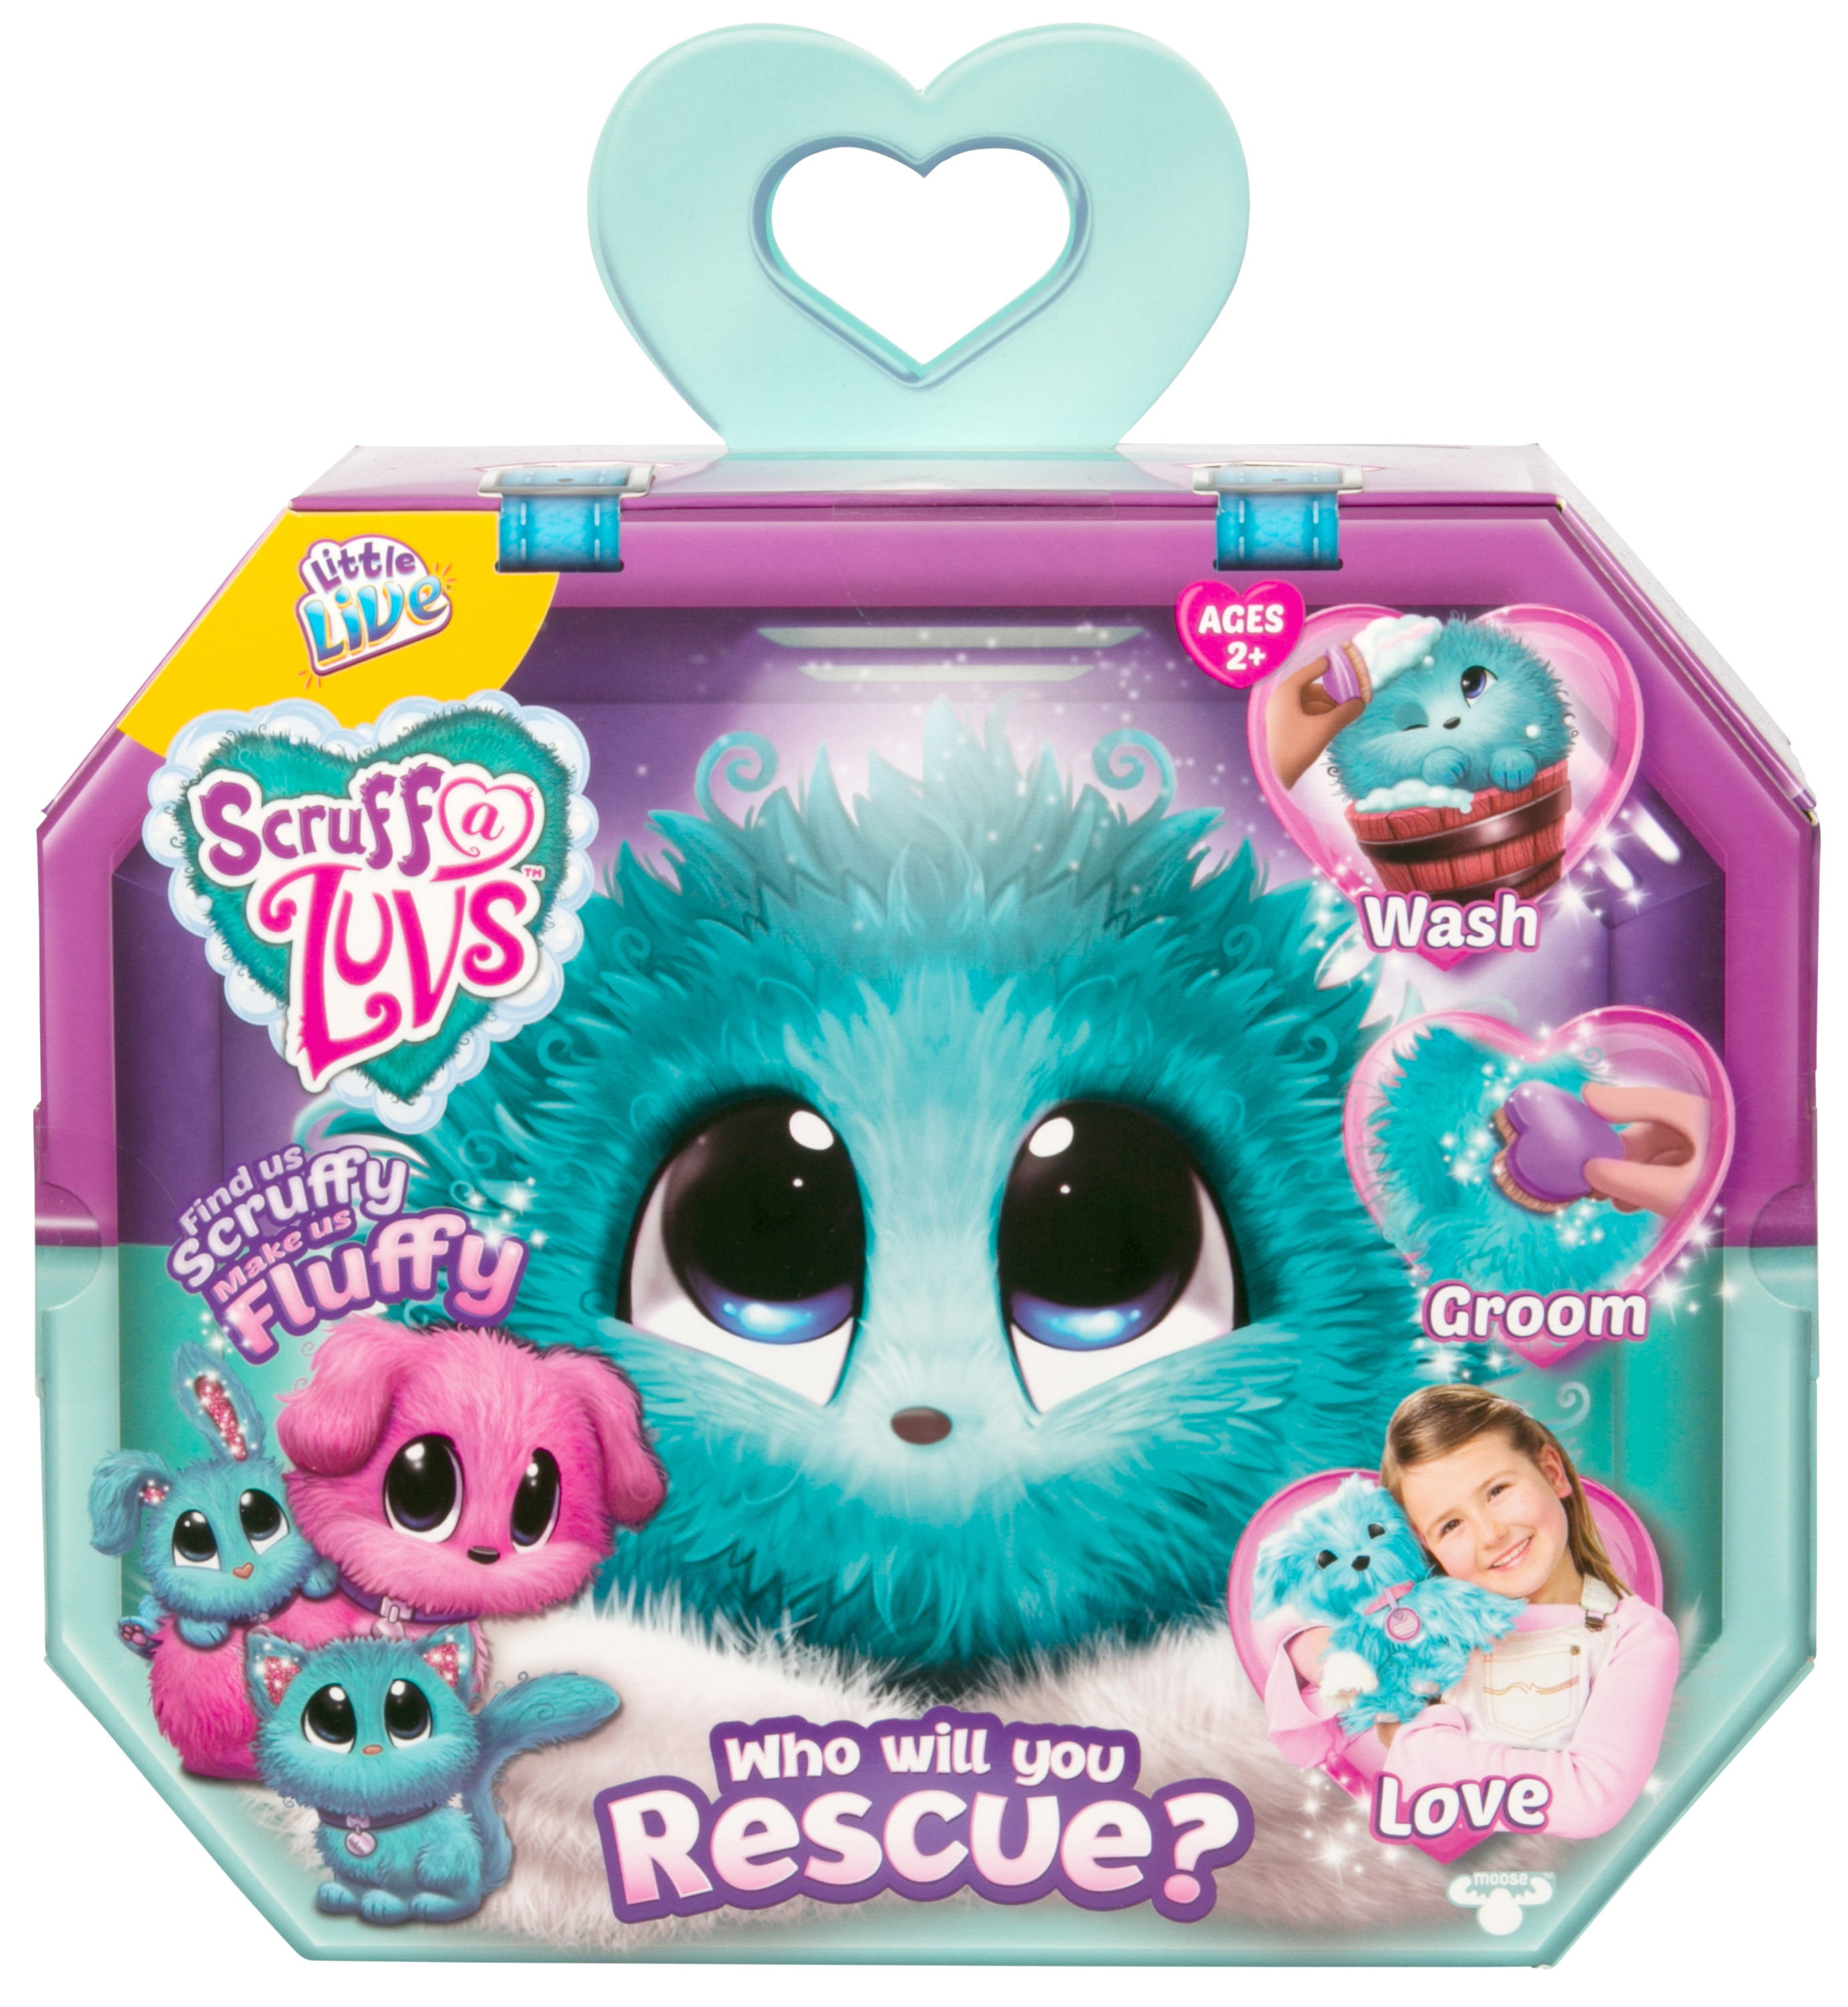 Little Live Scruff-a-Luvs? Plush Mystery Rescue Pet, Blue - image 11 of 12